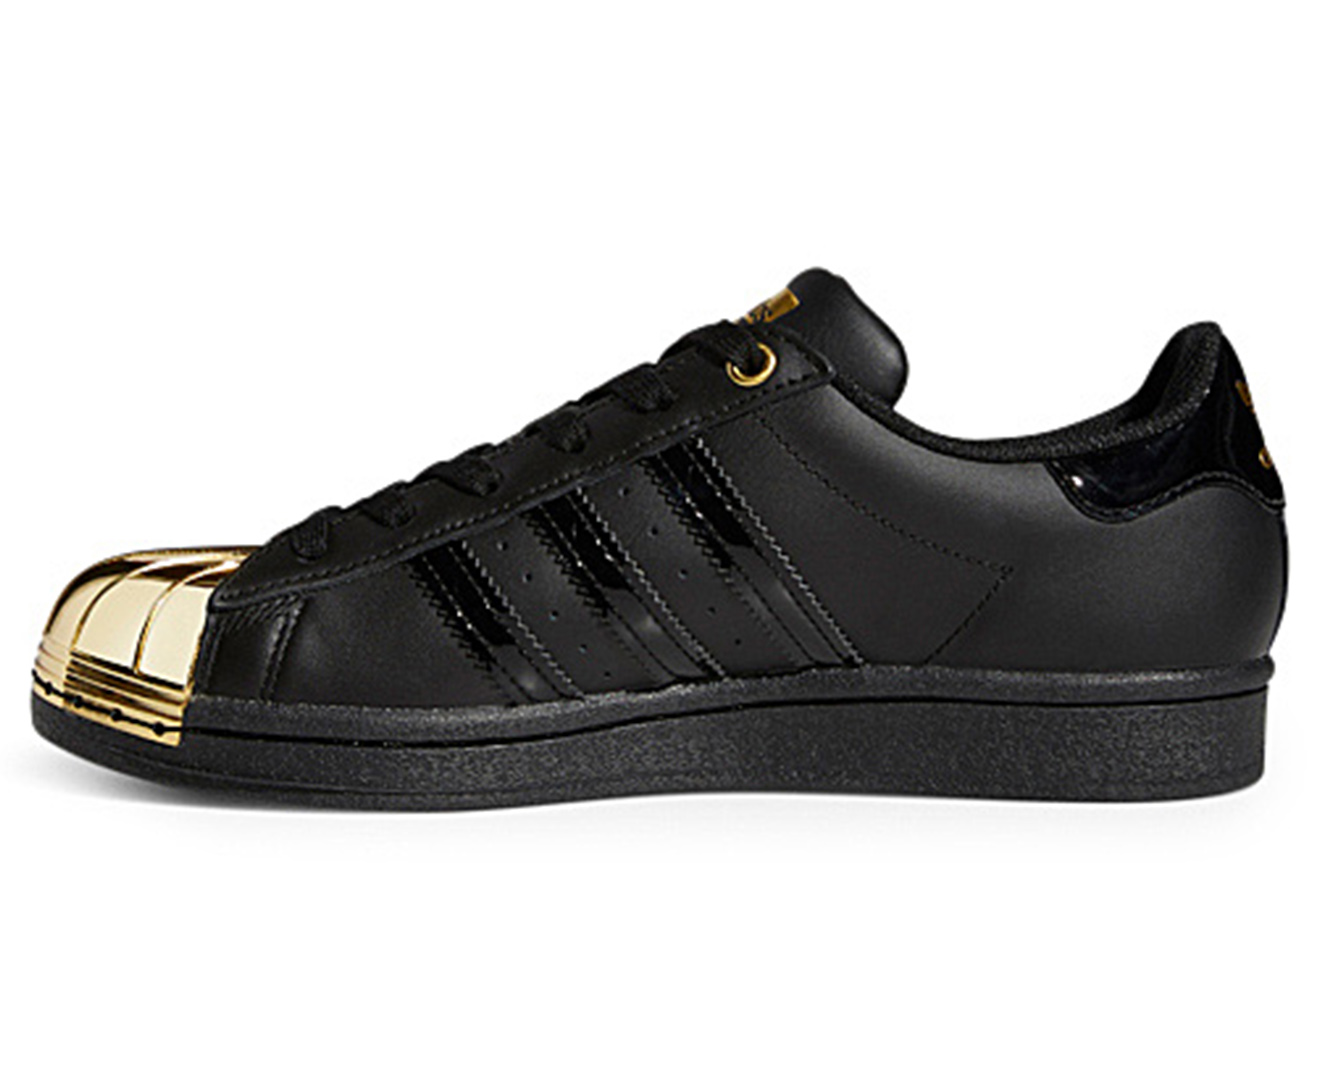 Adidas Originals Women's Superstar Metal Toe Sneakers - Black/Gold ...